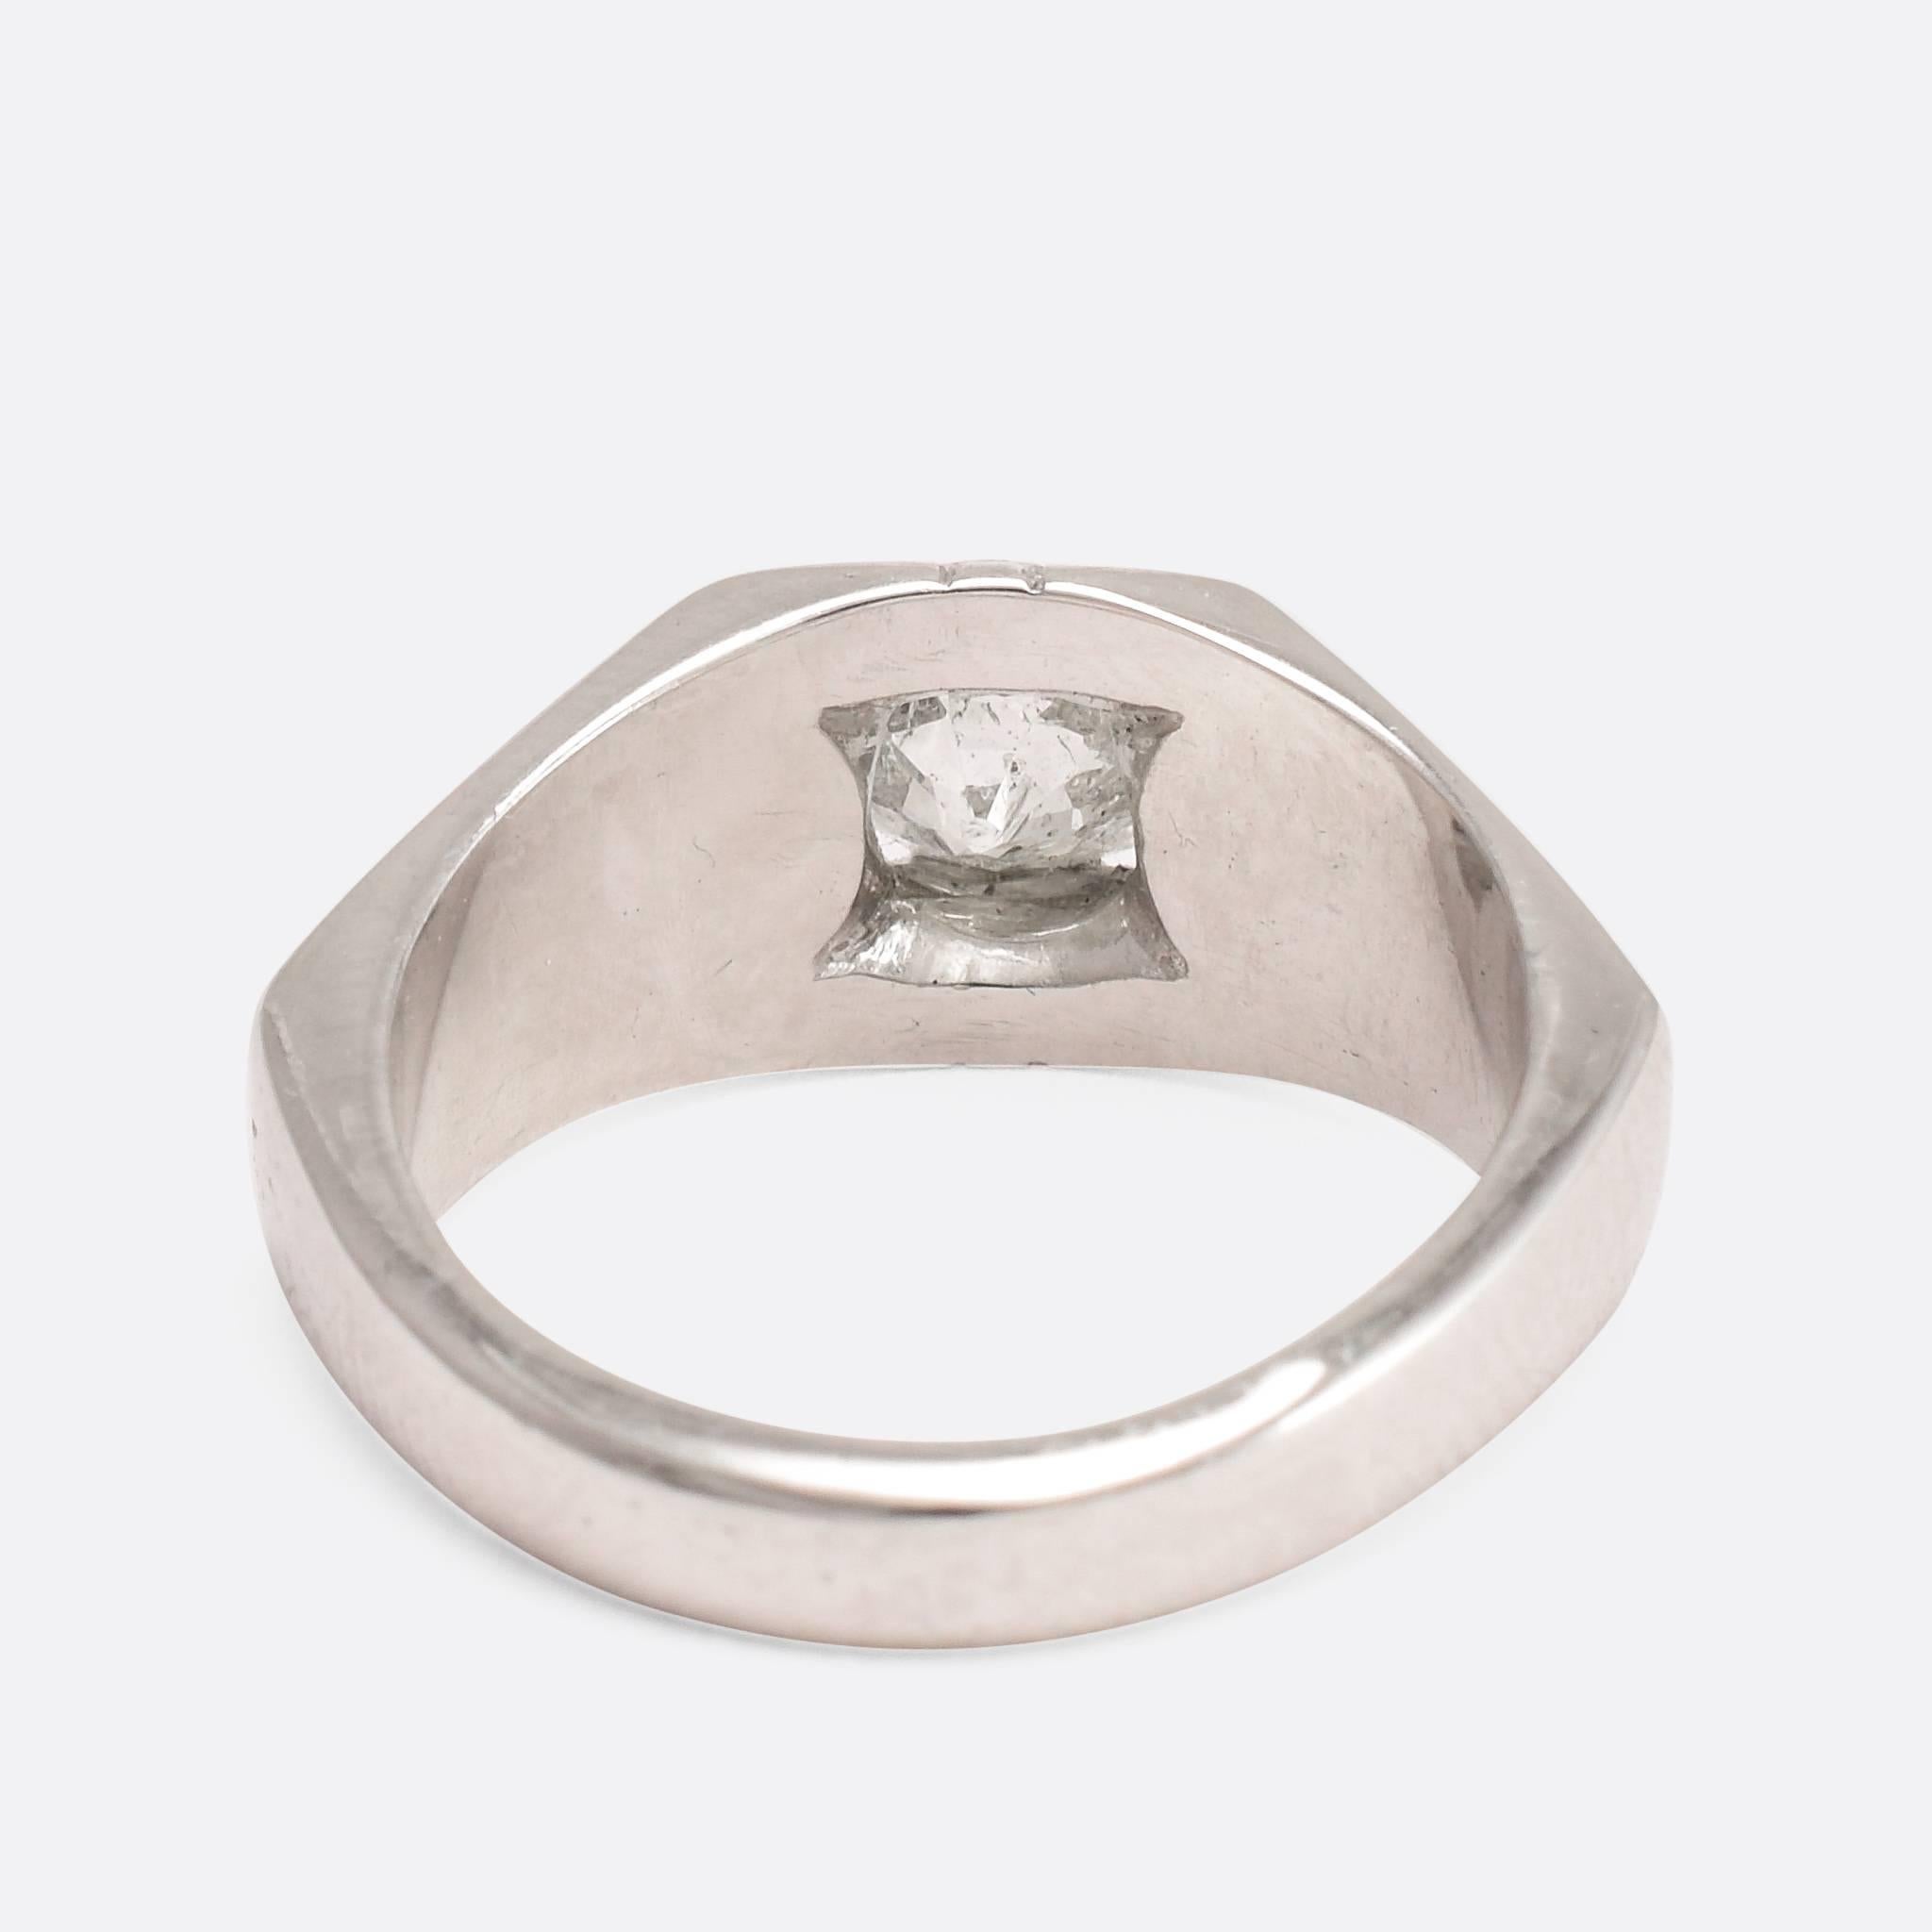 1.2 carat cushion cut diamond ring